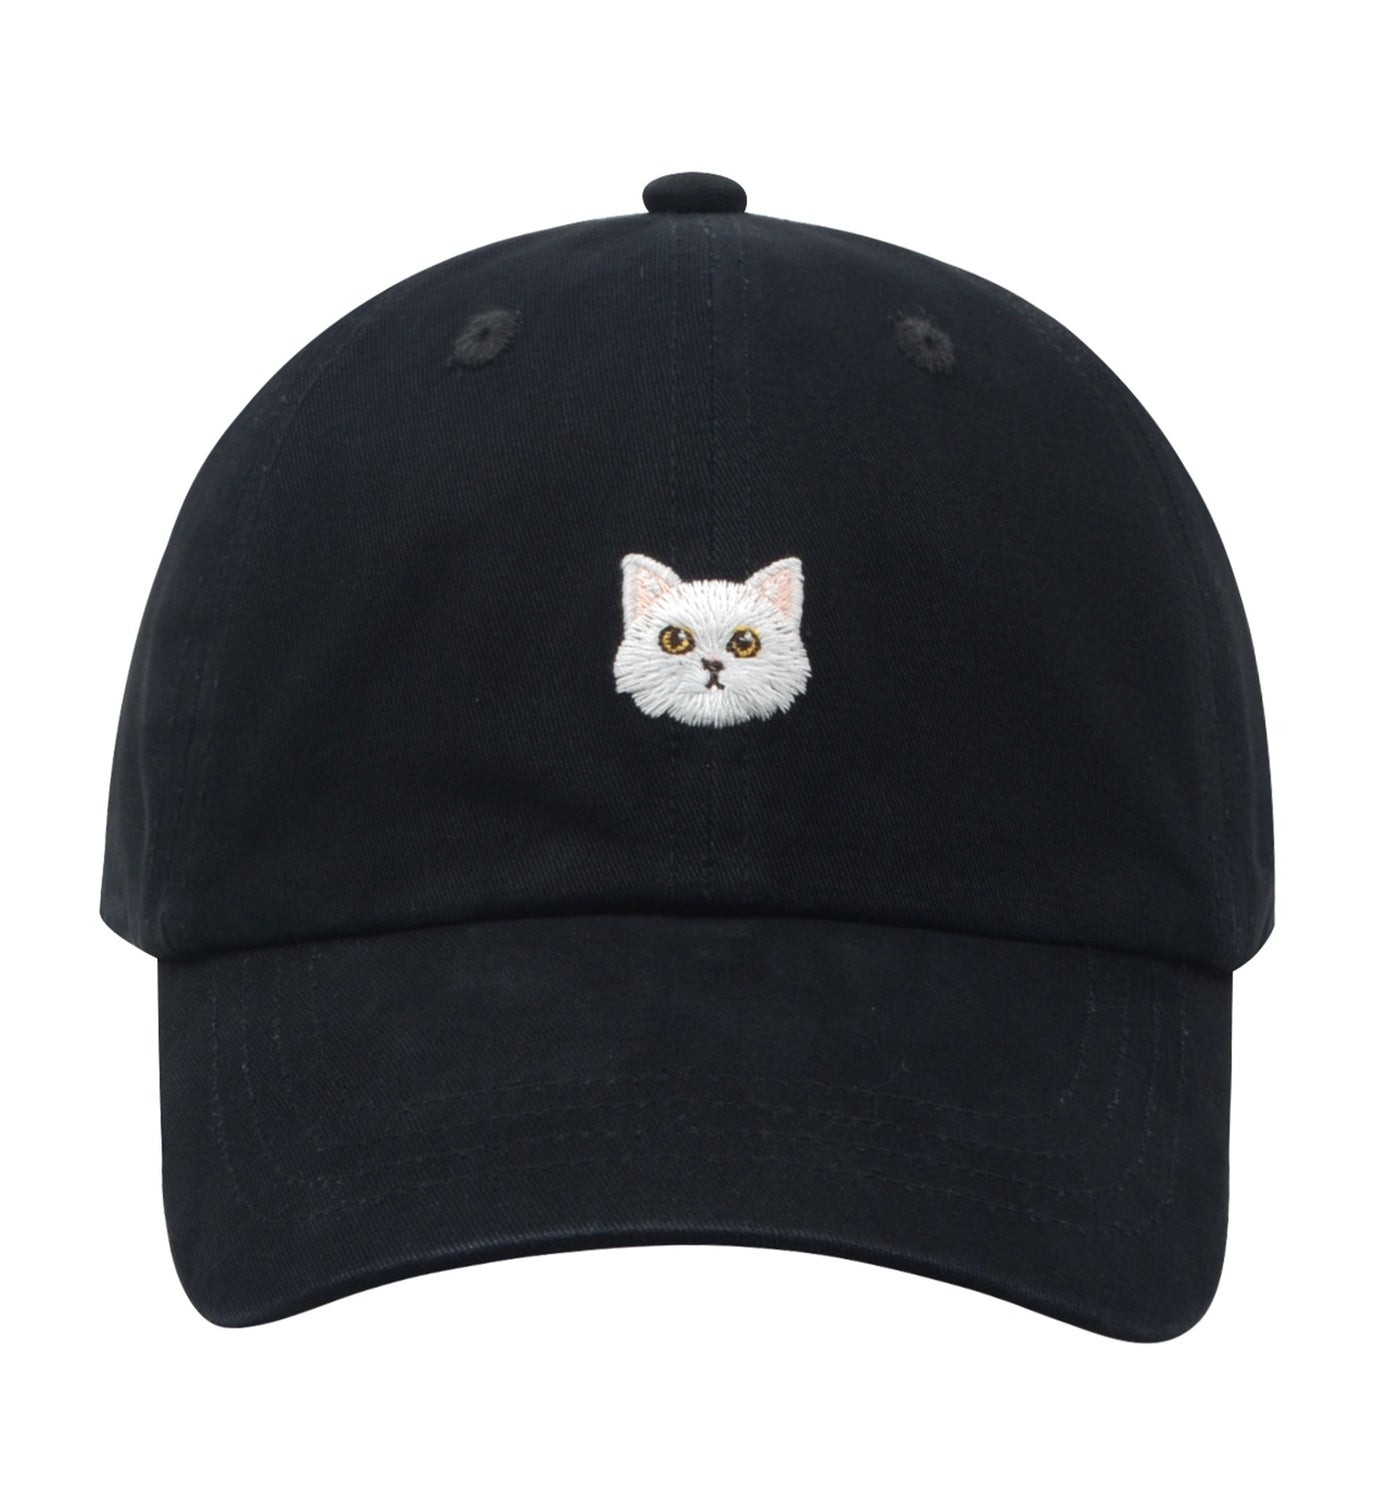 Hatphile White Cat Soft Baseball Cap